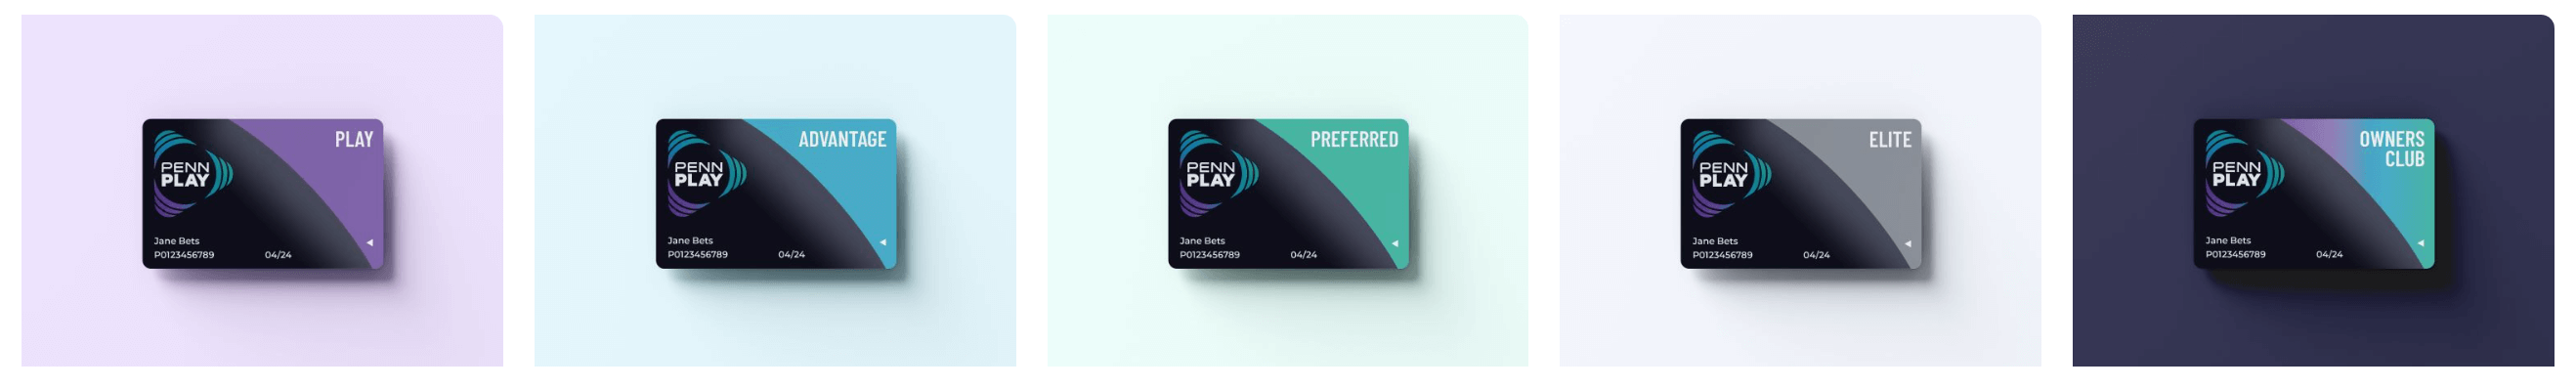 PENN Play Members Rewards